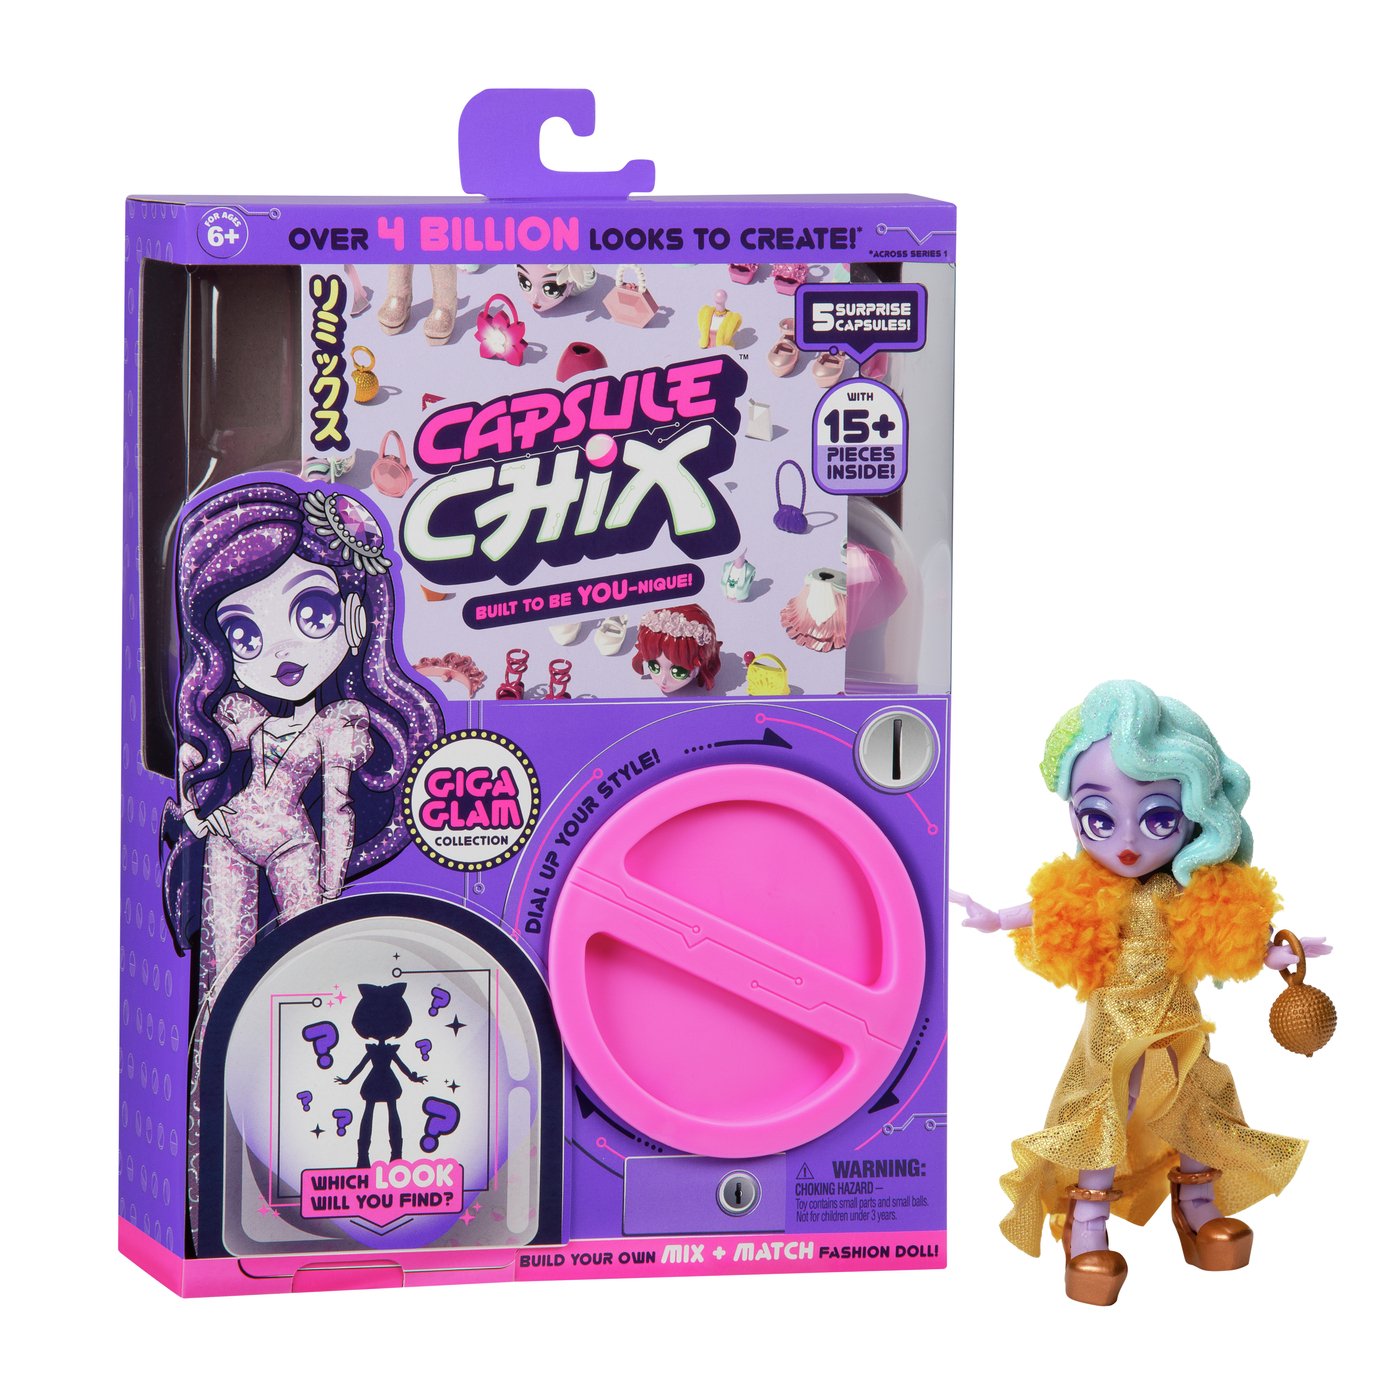 Capsule Chix Build Your Own Surprise Doll - Giga Glam